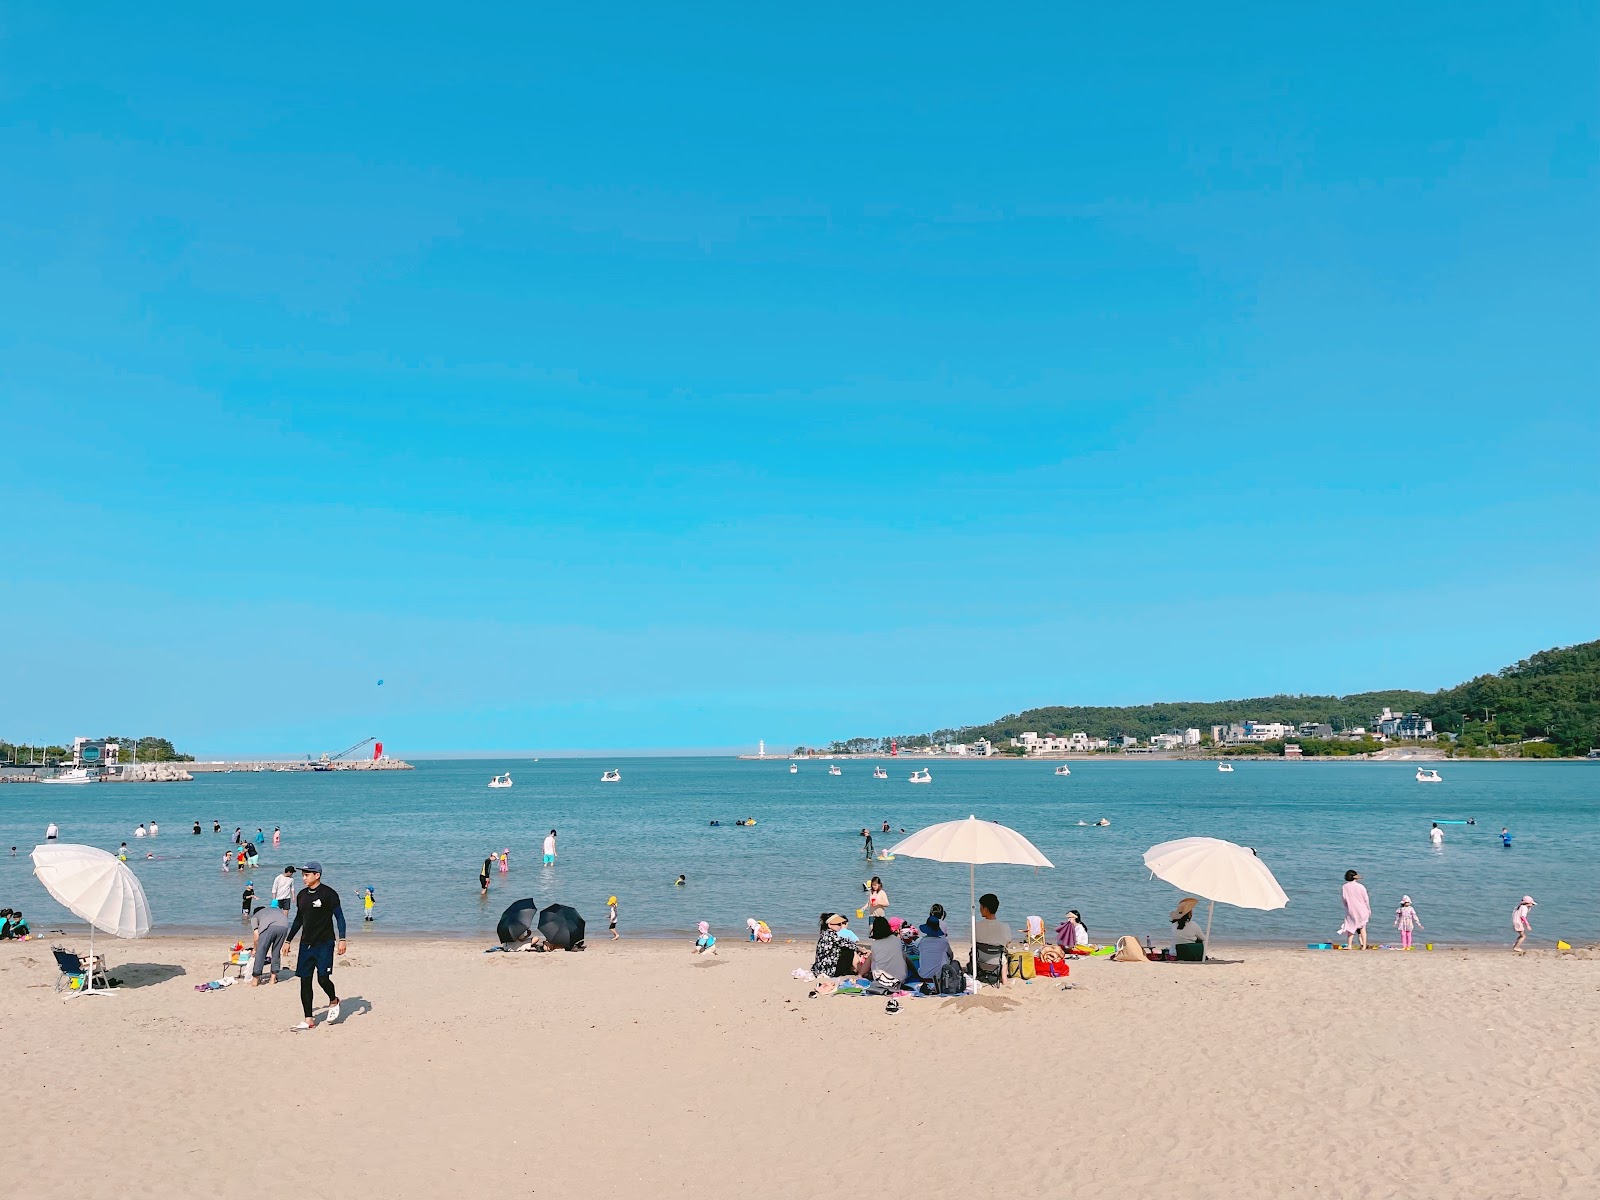 Foto de Praia de Ilgwang - lugar popular entre os apreciadores de relaxamento